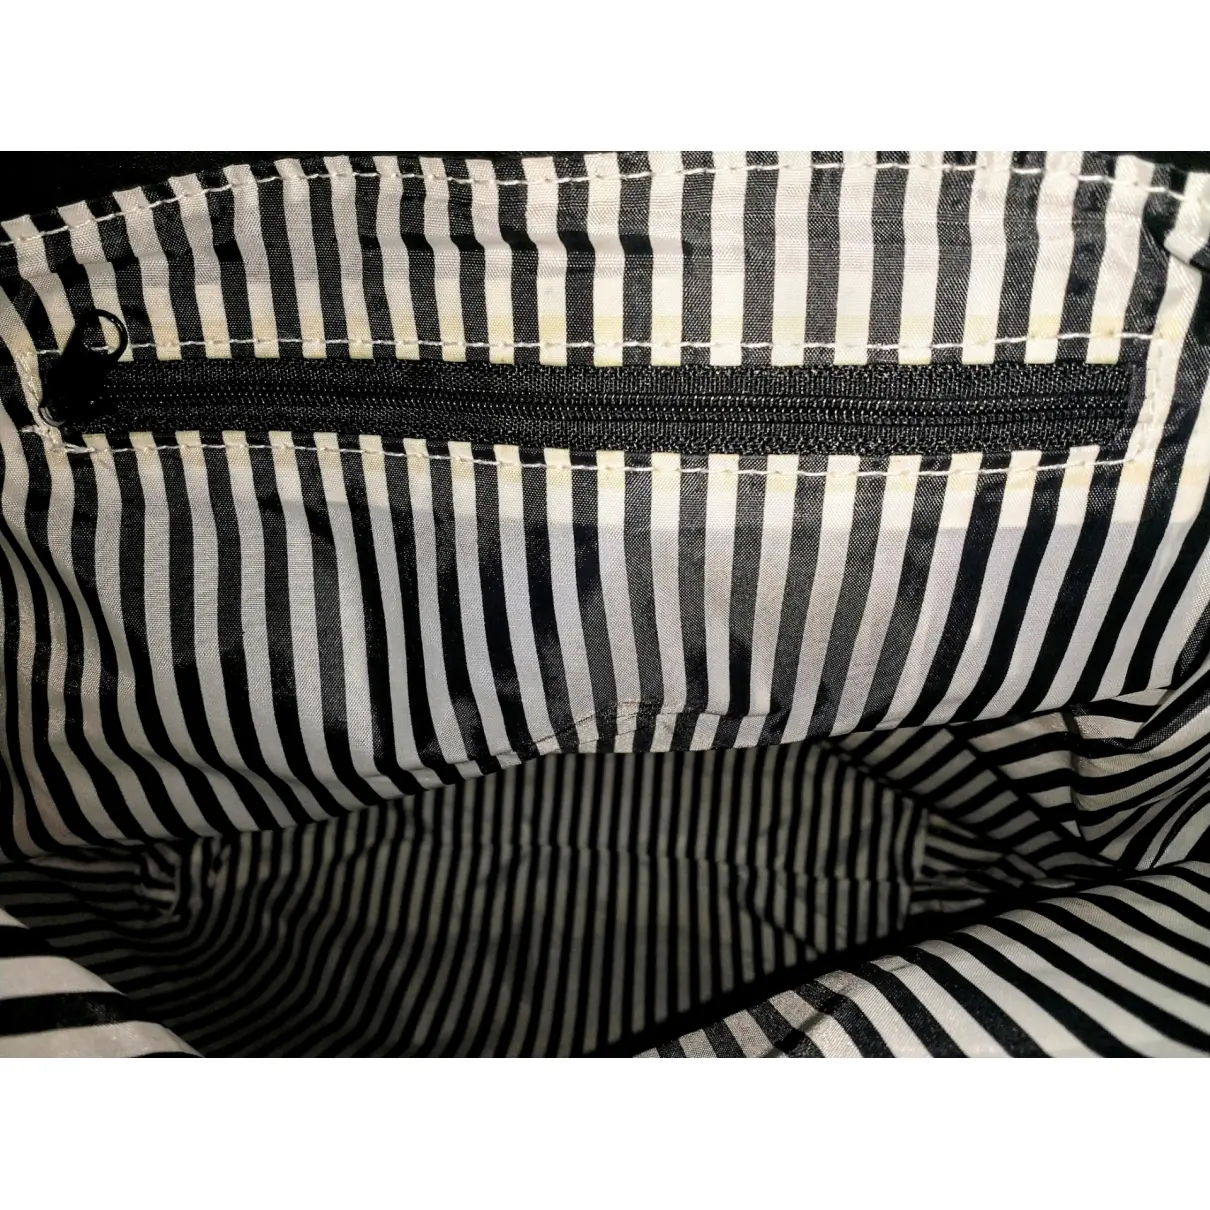 Cloth handbag Givenchy